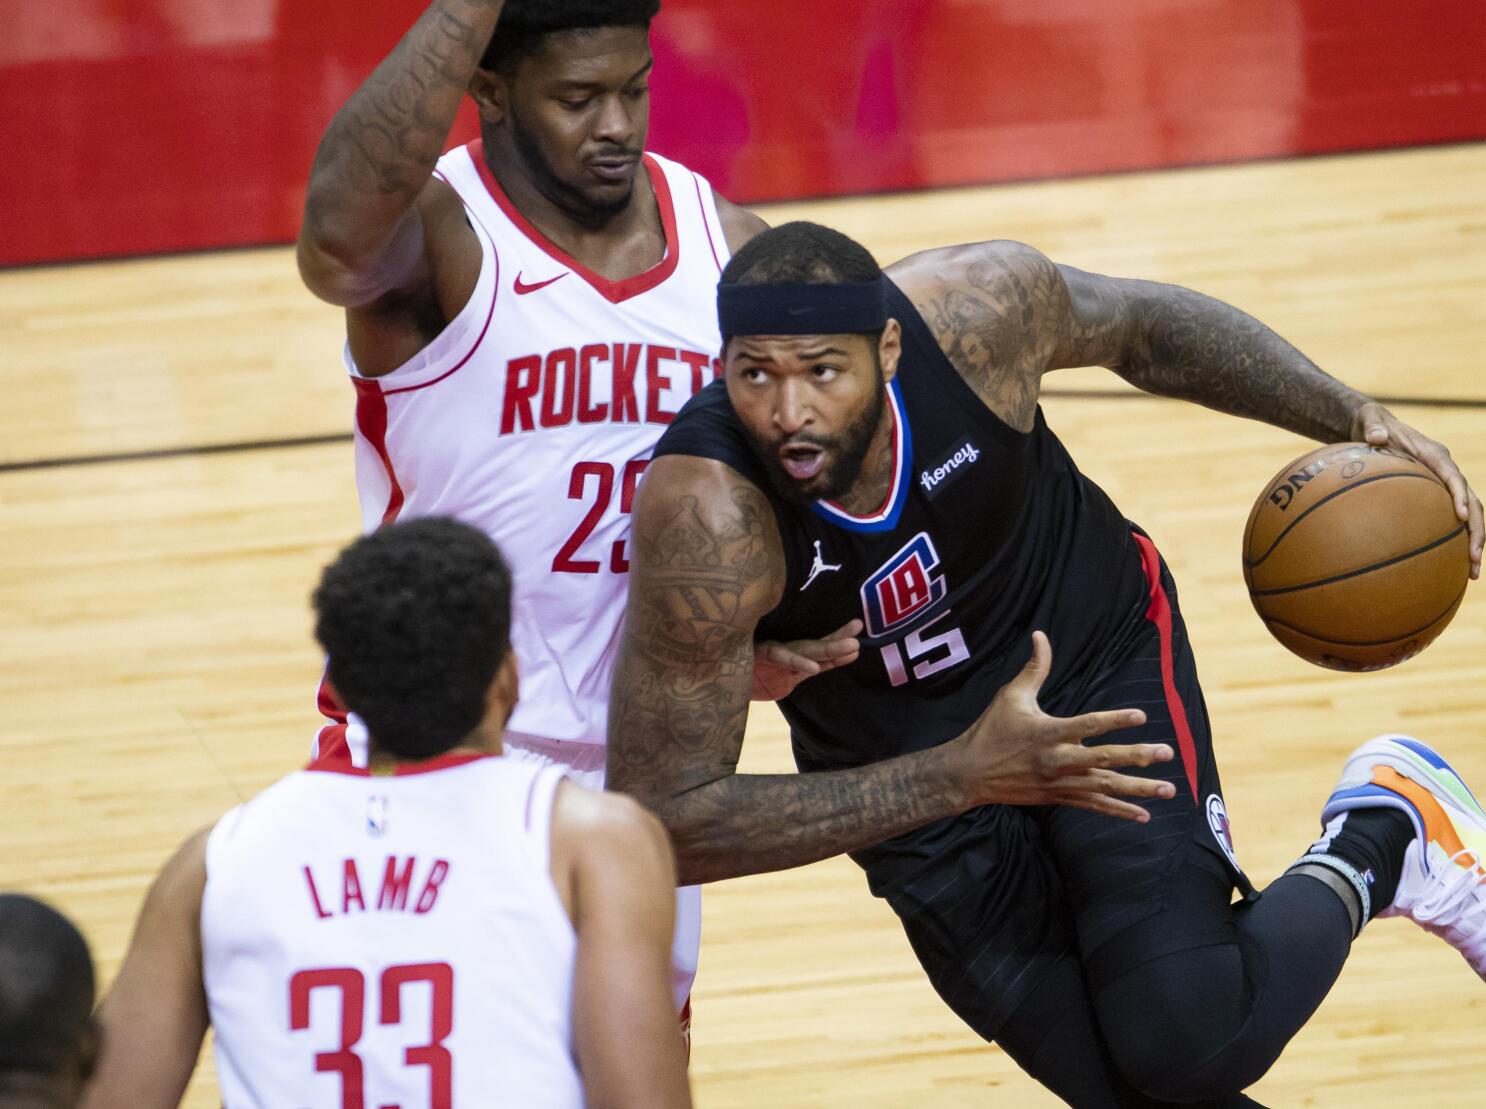 Houston Rockets Releasing DeMarcus Cousins: Report